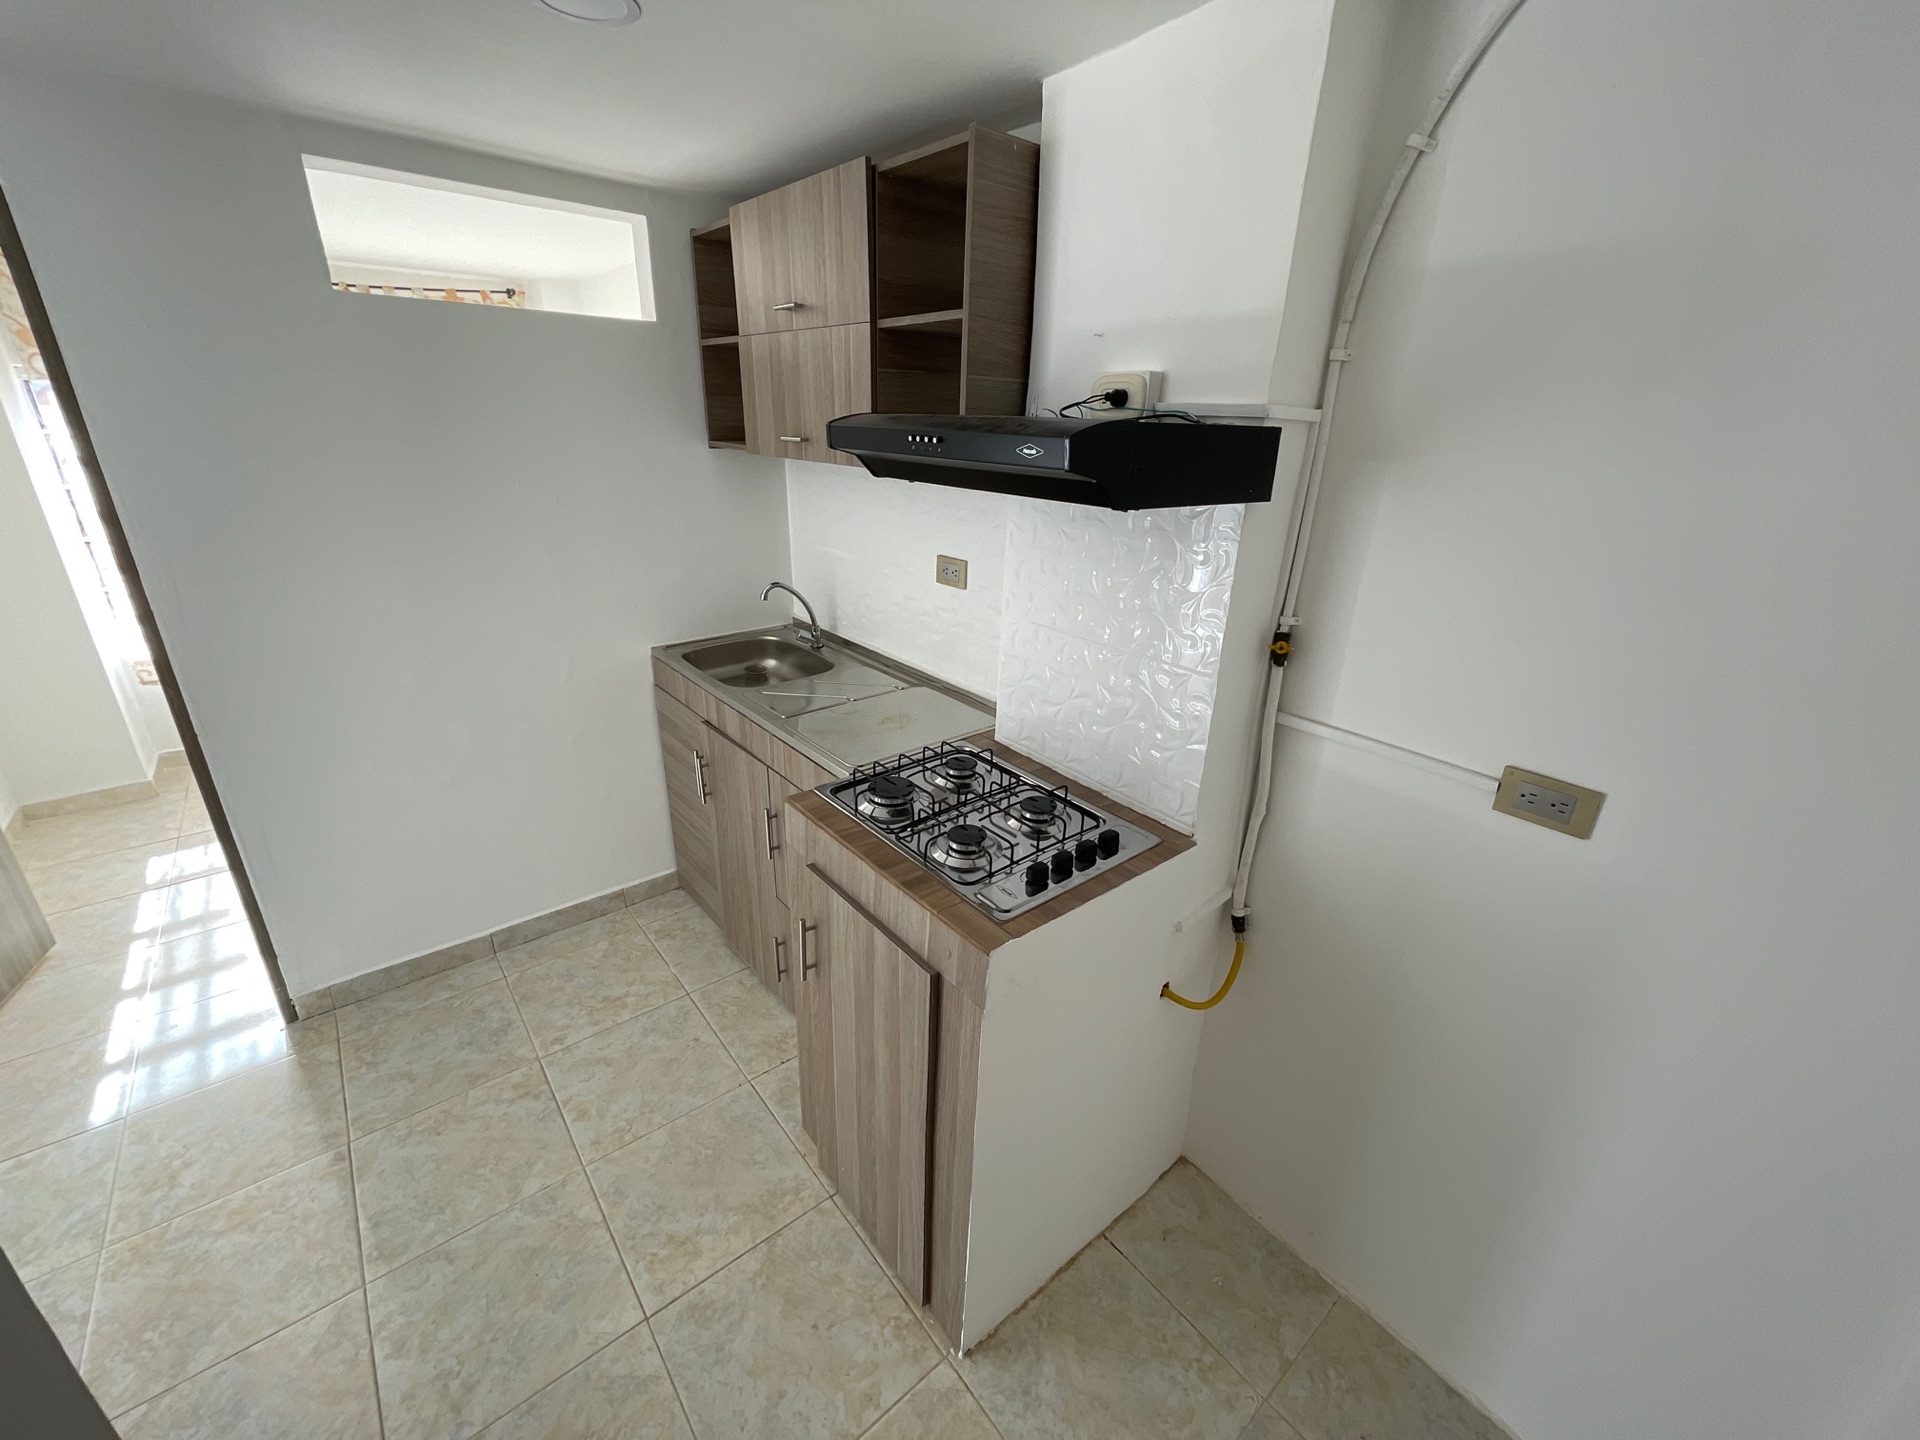 Casa en venta armenia DJI_20230509_080835_693.JPG